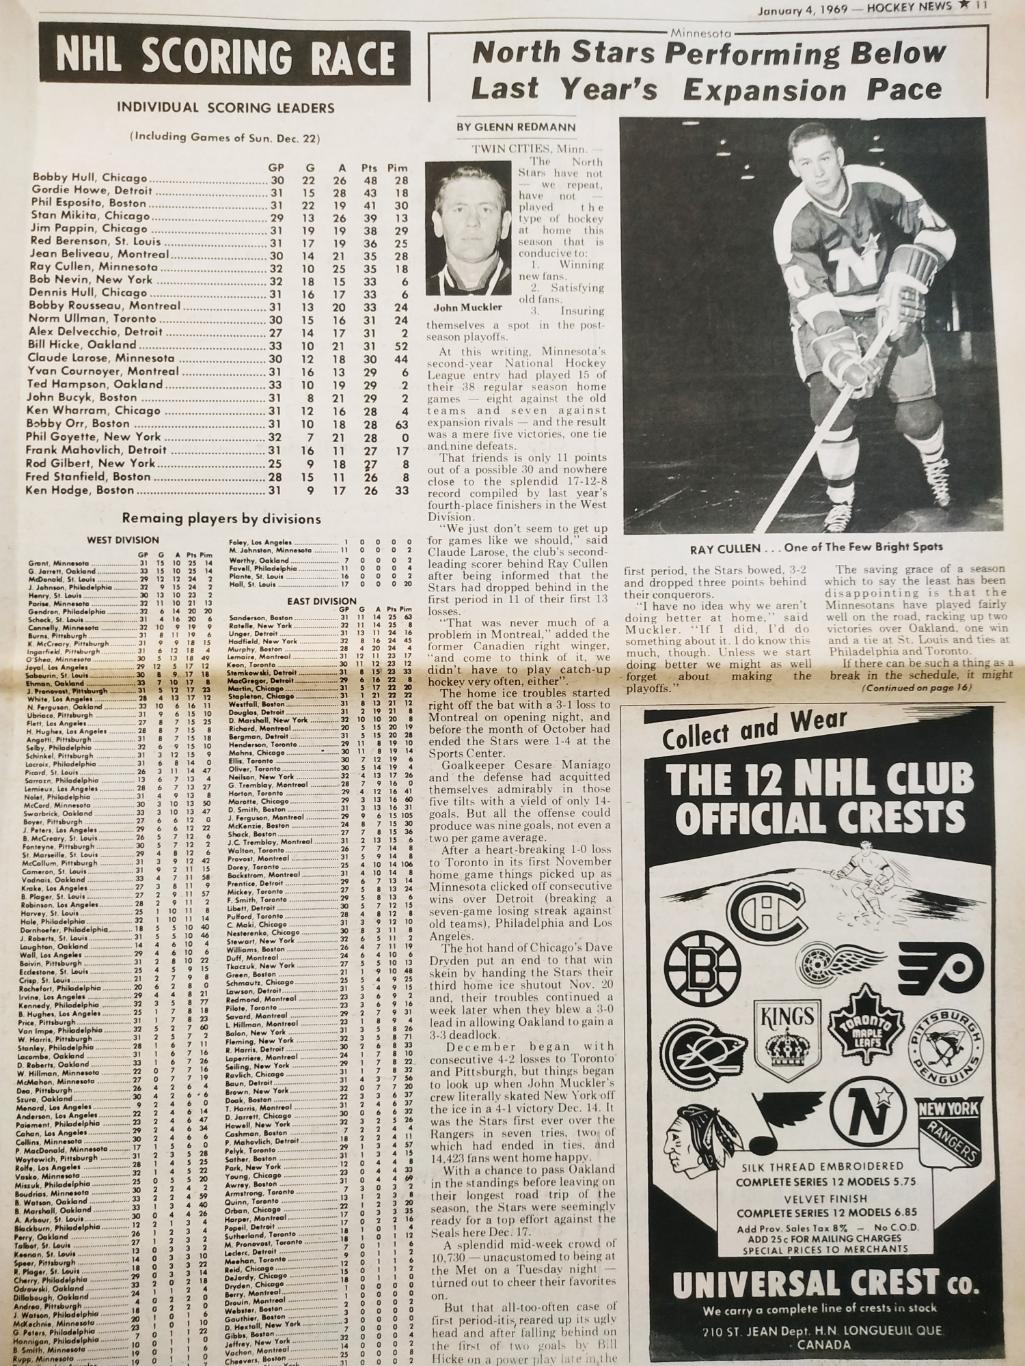 ХОККЕЙ ЖУРНАЛ ЕЖЕНЕДЕЛЬНИК НХЛ НОВОСТИ ХОККЕЯ JAN.4 1969 NHL THE HOCKEY NEWS 4